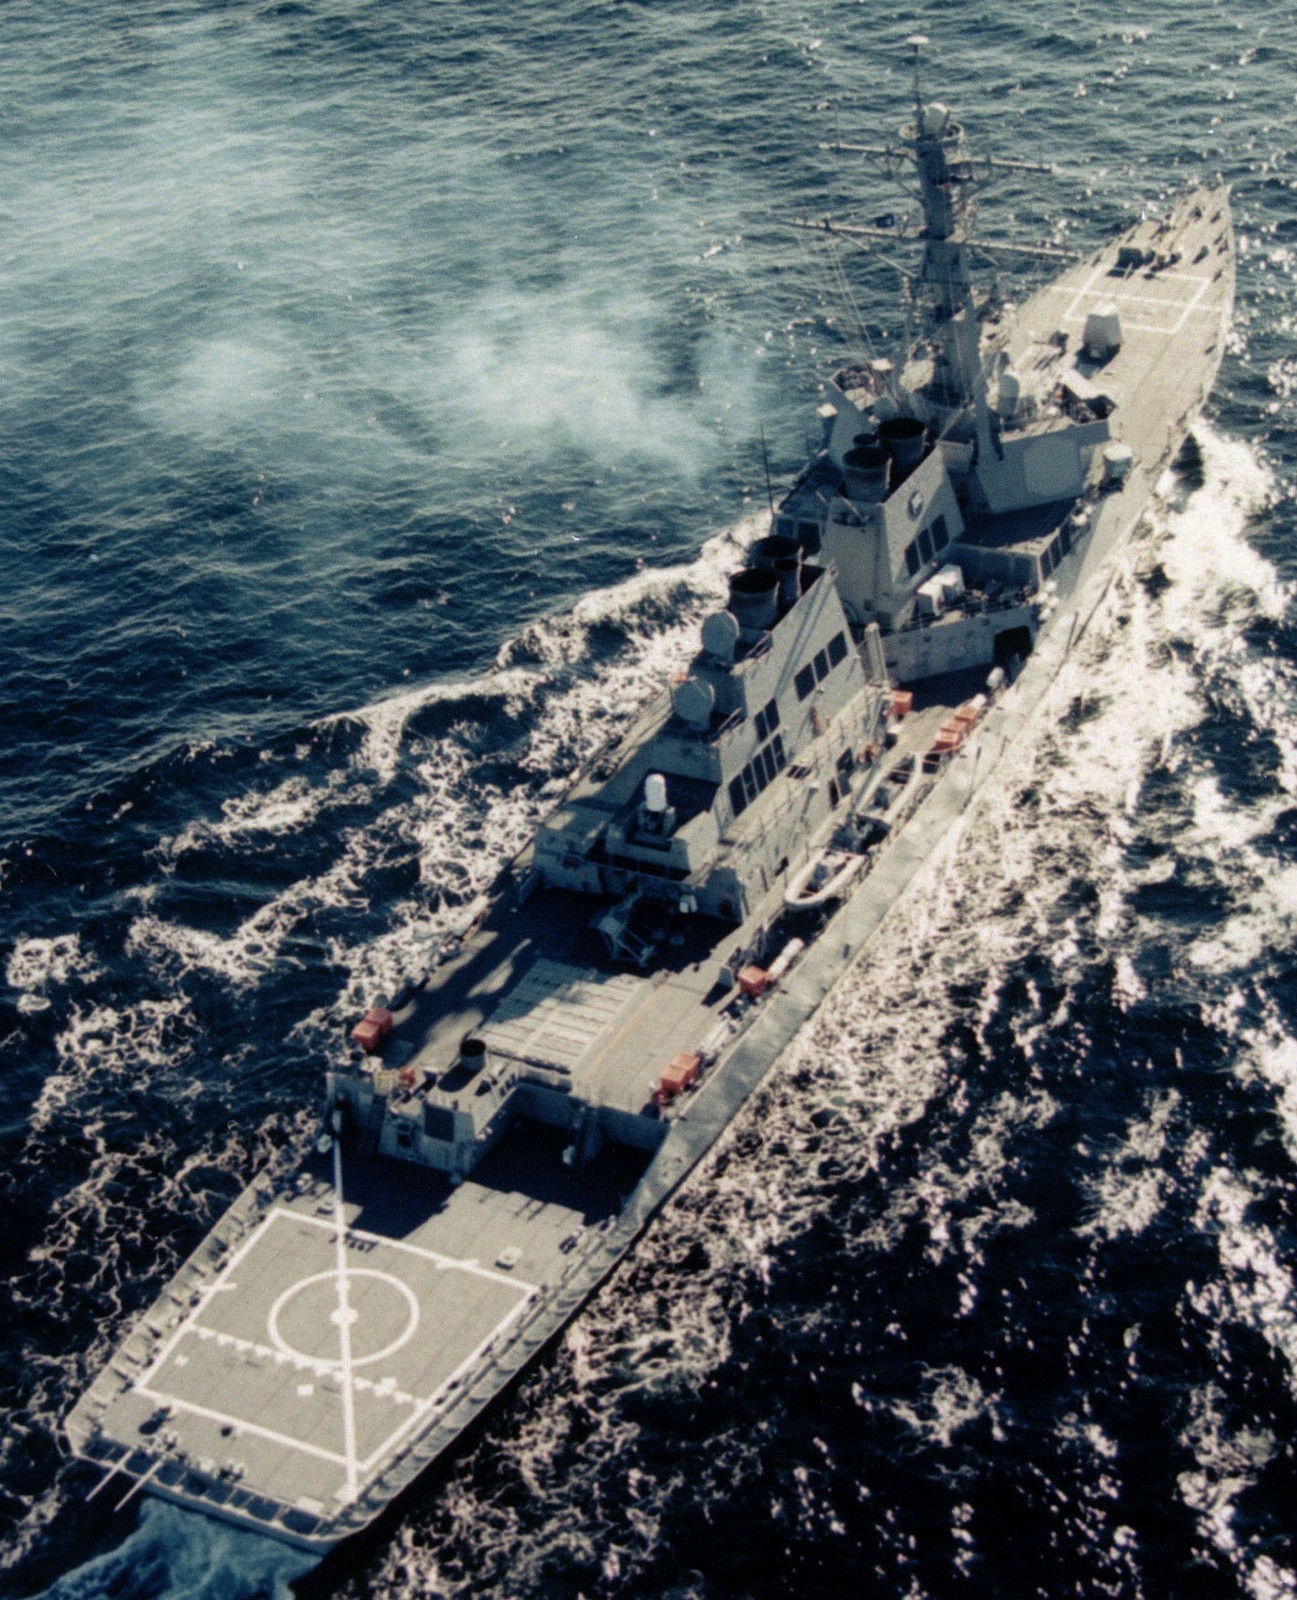 ddg-76 uss higgins guided missile destroyer arleigh burke class aegis navy 29 sea trials